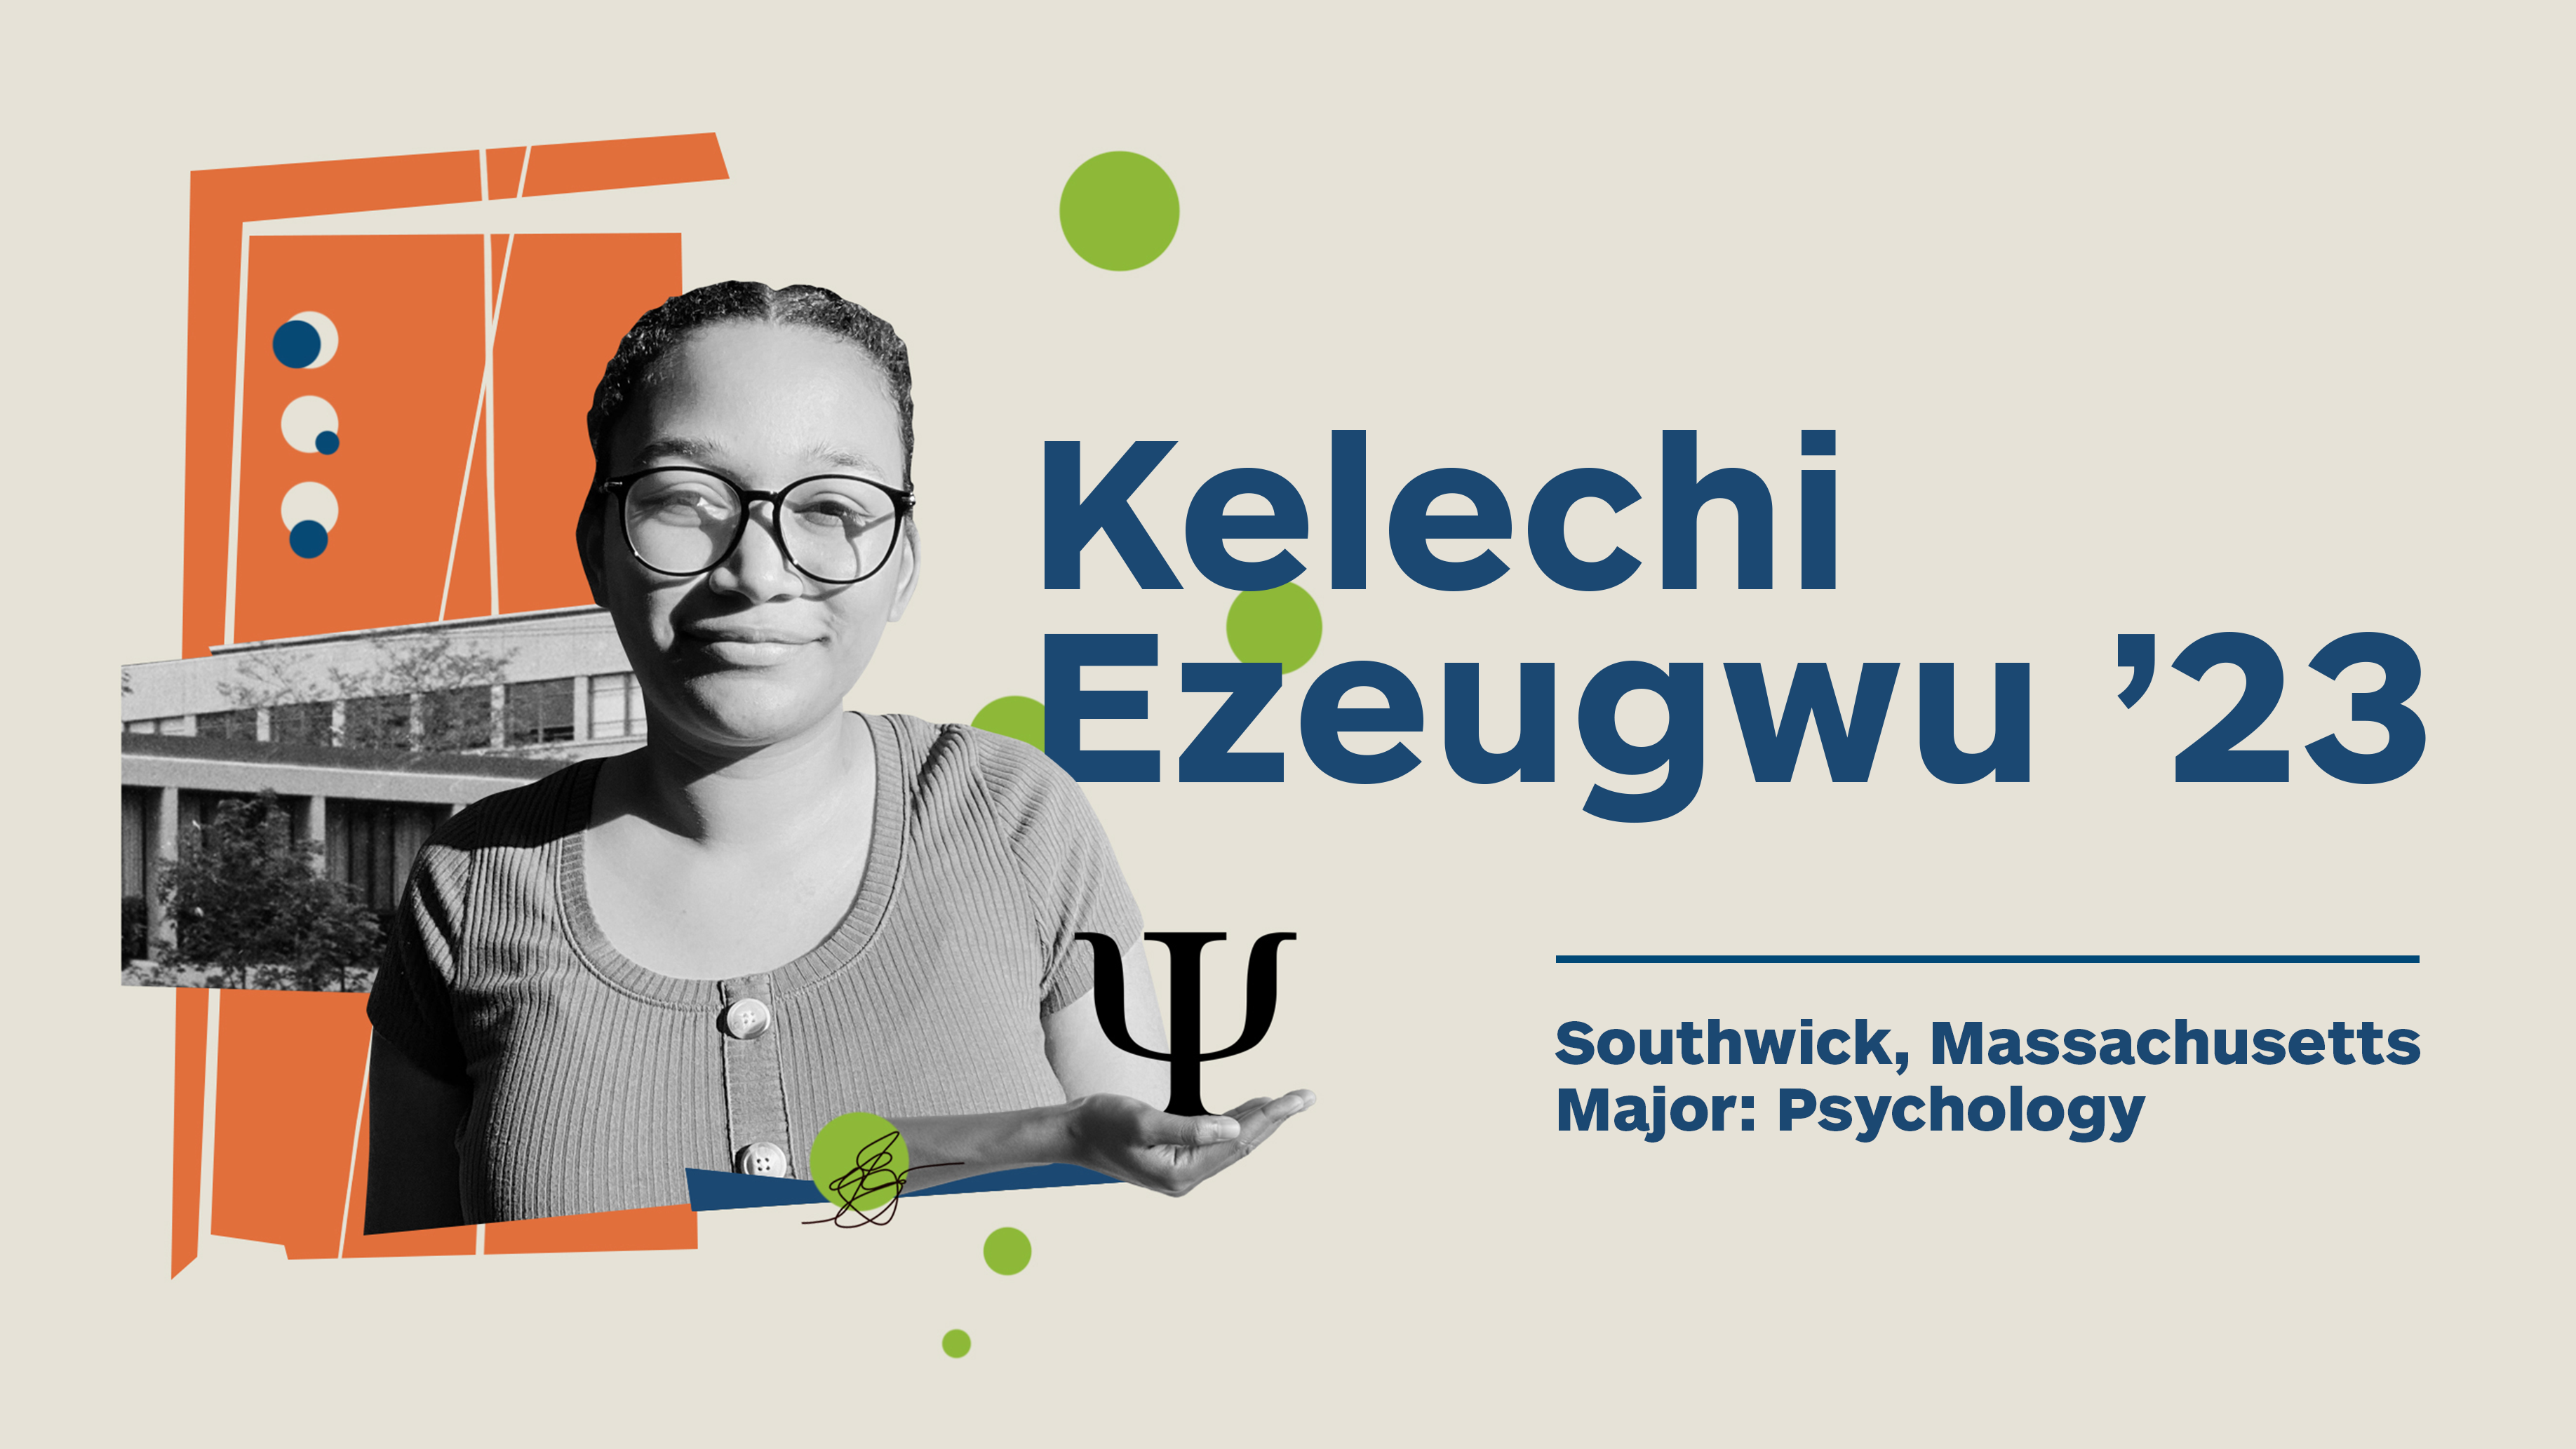 Kelechi Ezeugwu, Southwick, Massachusetts, Major: Psychology